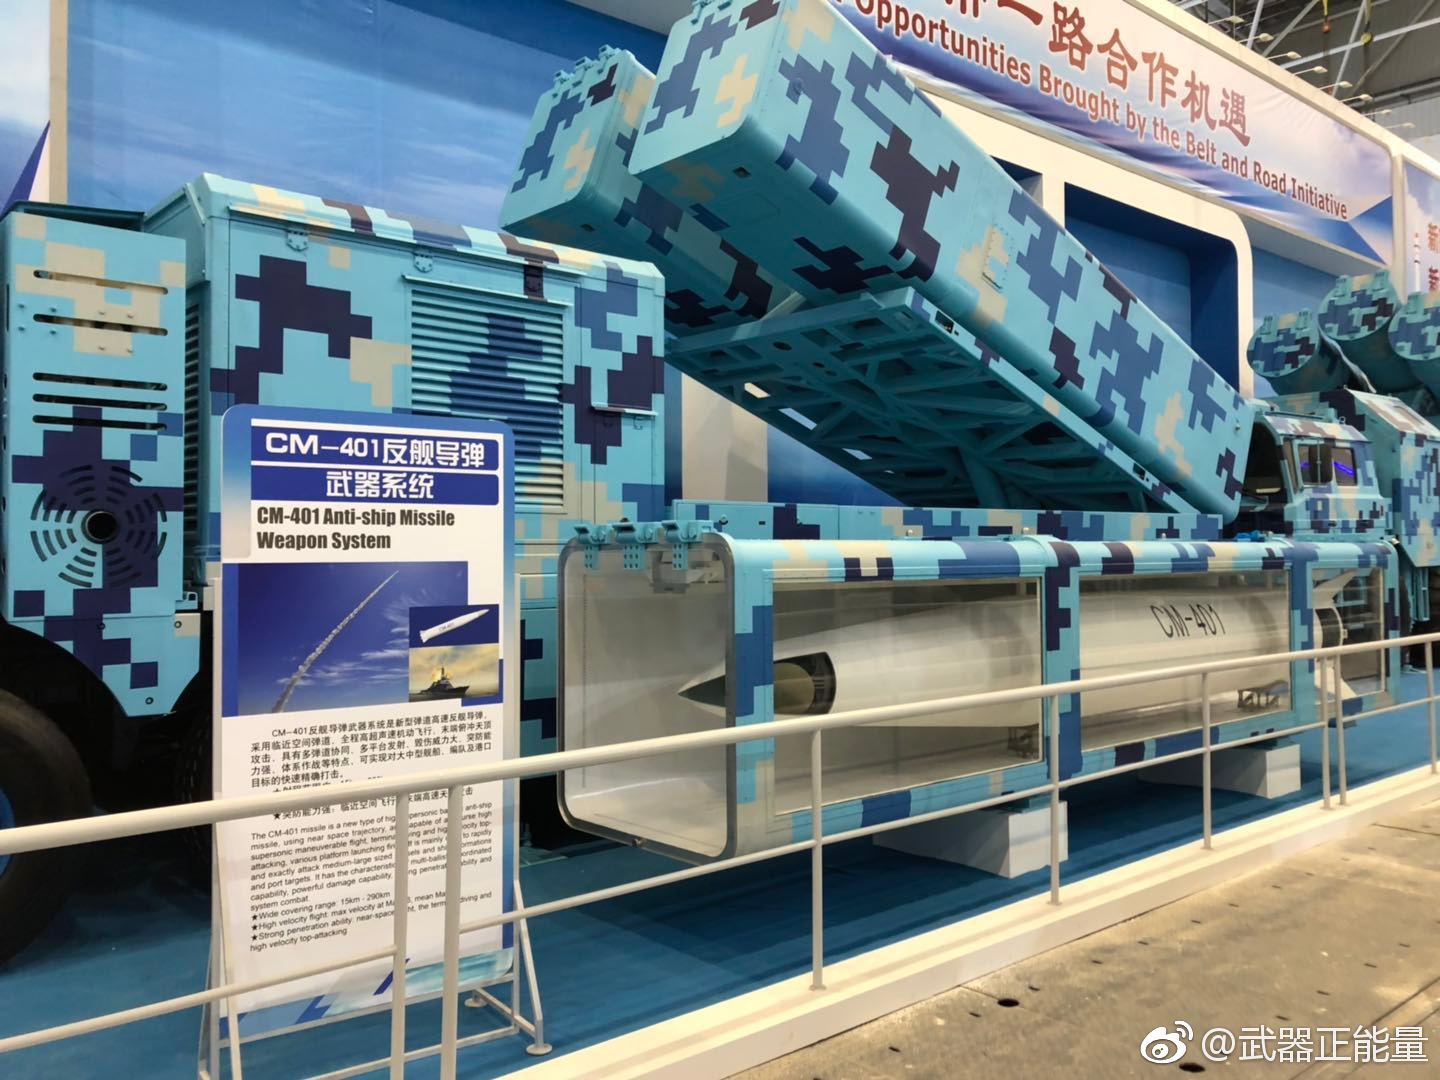 2018-11-05-CM-401-la-Chine-exporte-ses-missiles-balistiques-anti-navires-01.jpg